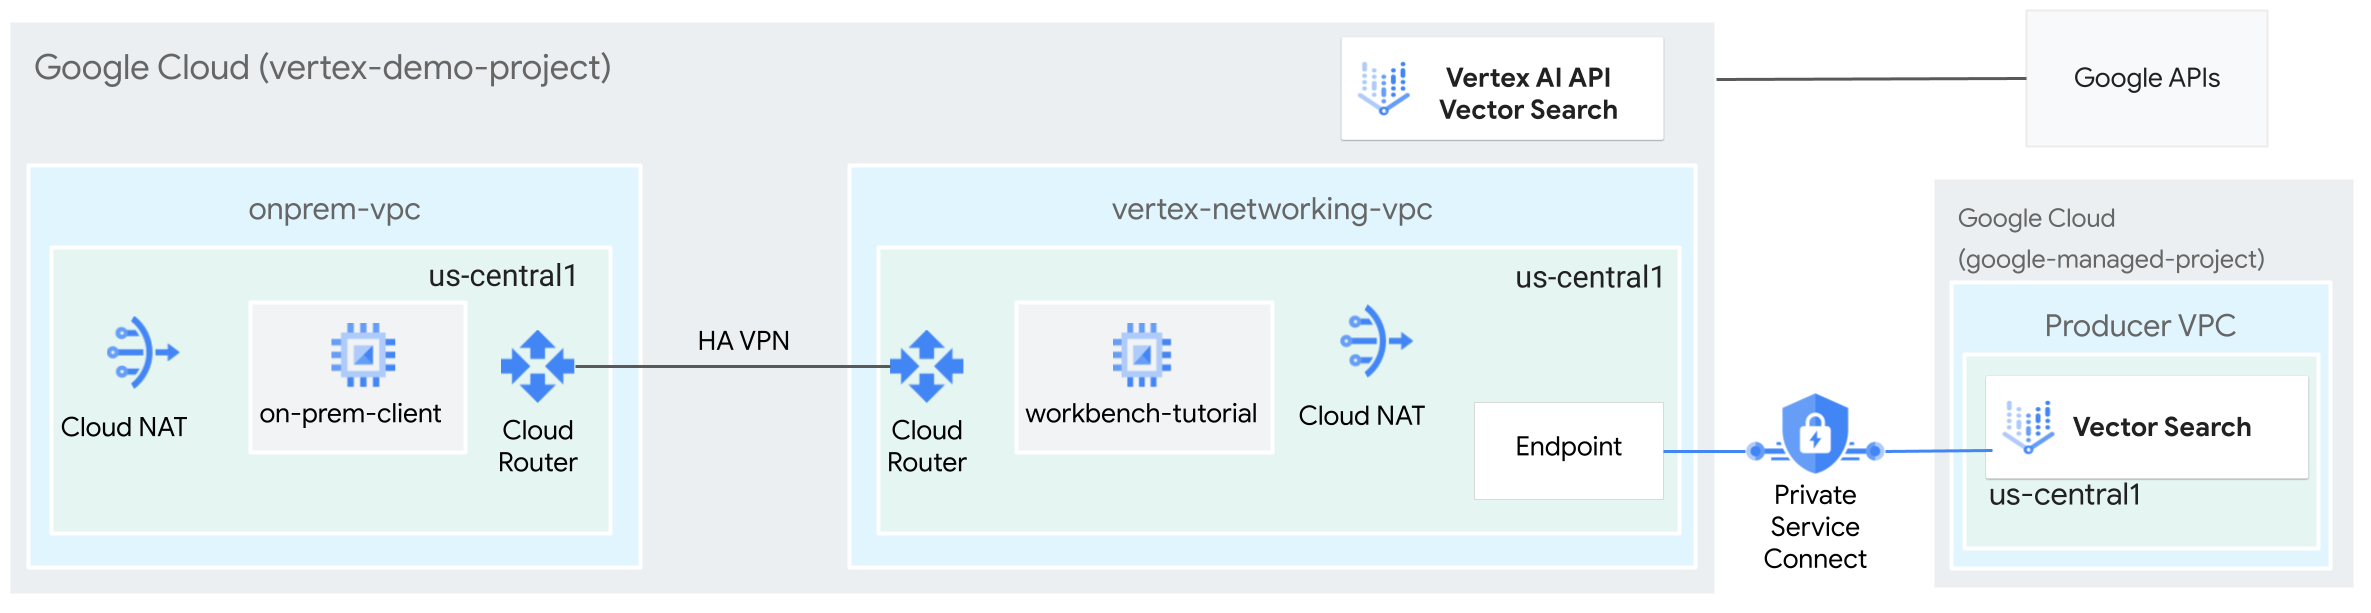 使用 Private Service Connect 从本地访问 Vector Search 索引的架构图。